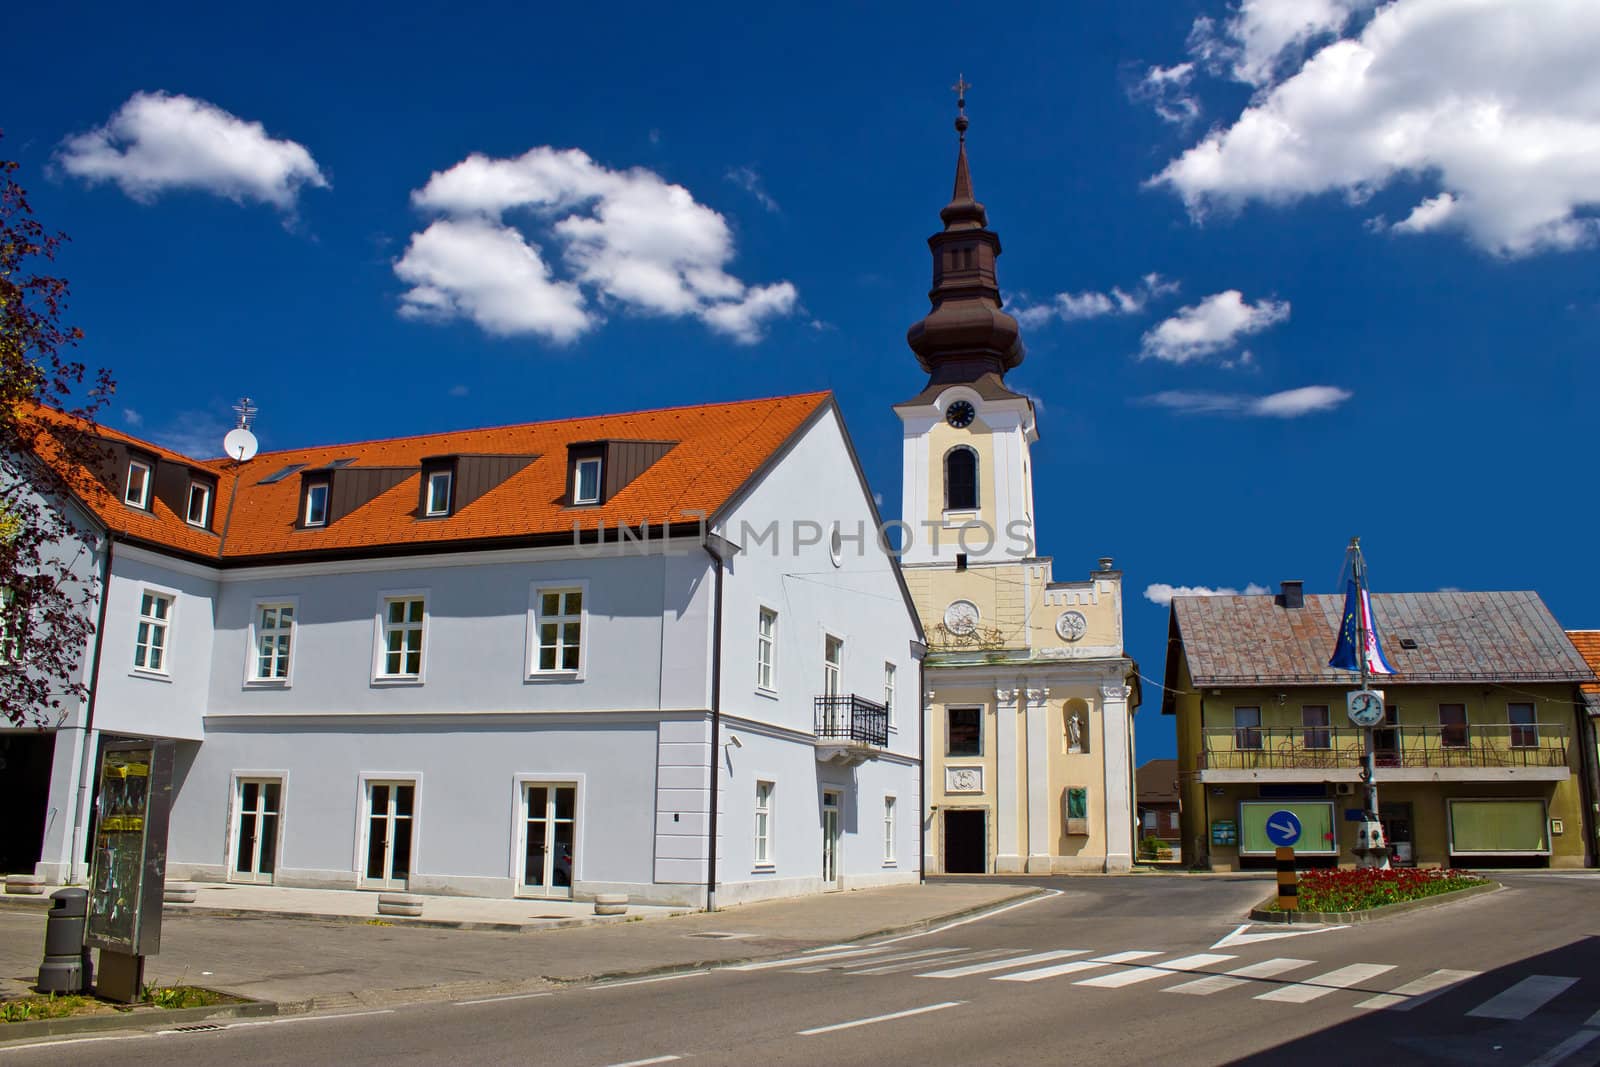 Town of Gospic centre, Croatia, Lika region